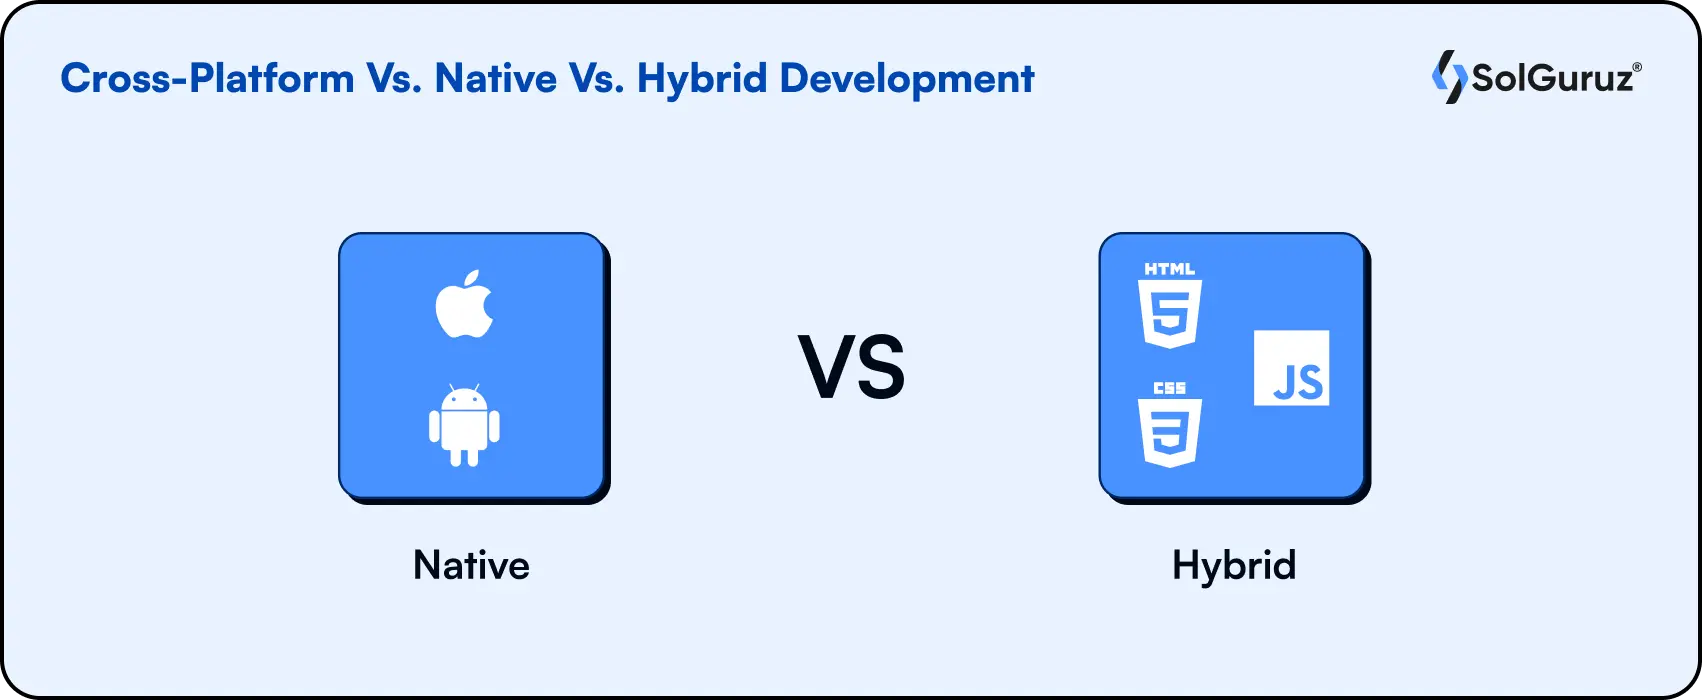 Cross-Platform Vs. Native Vs. Hybrid Development